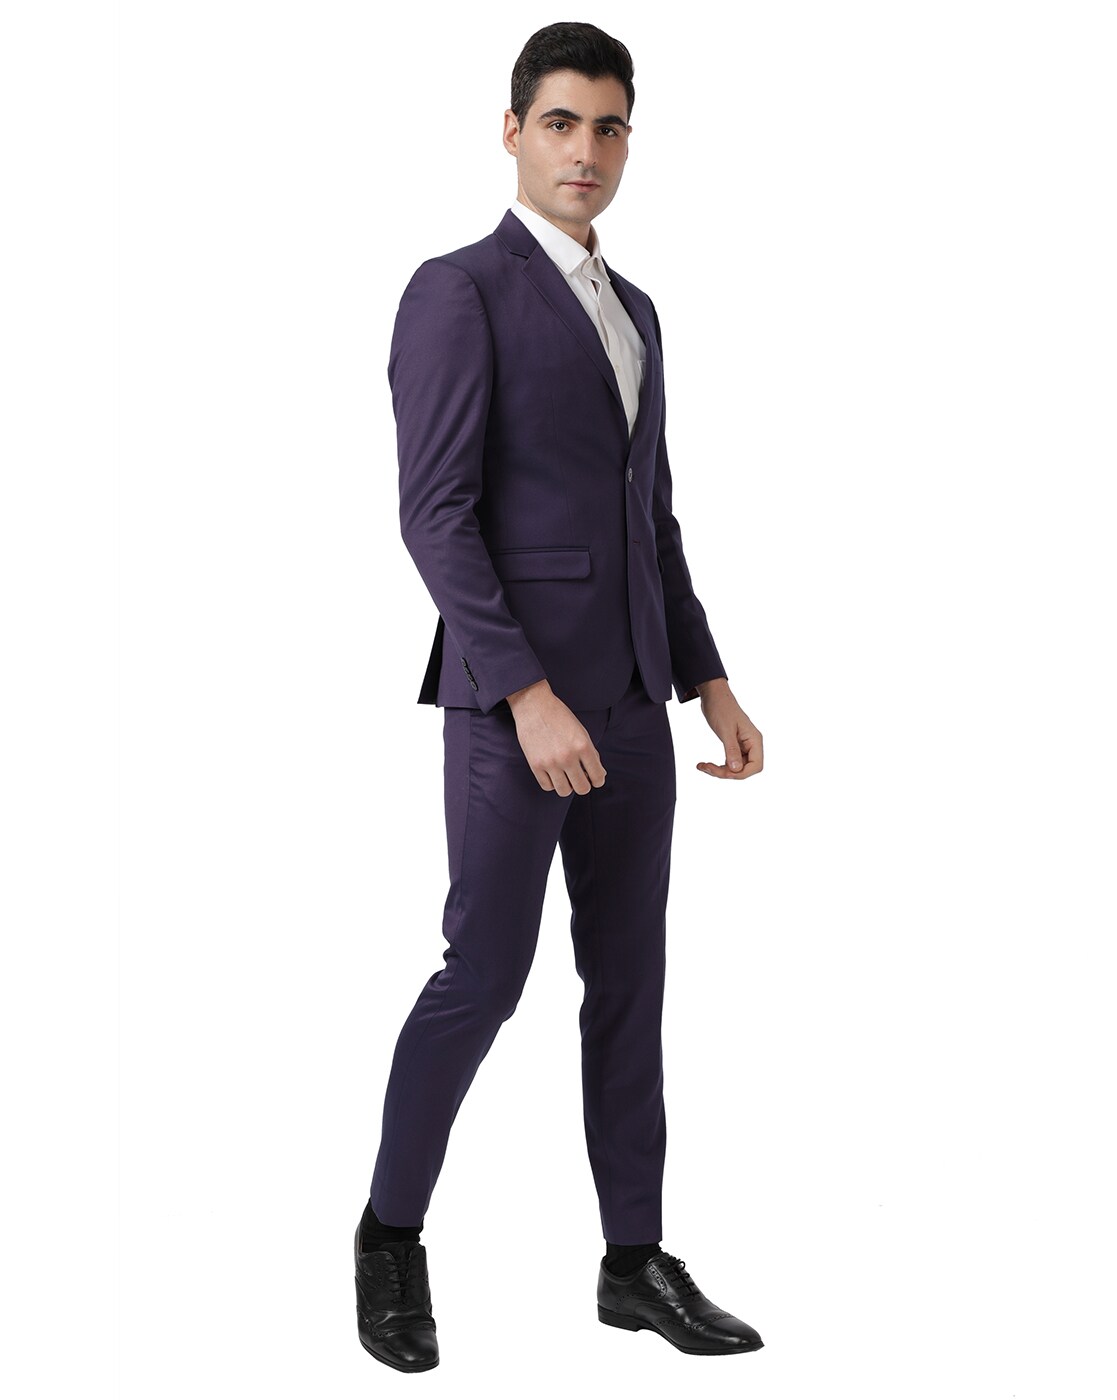 Details more than 167 dark purple suit latest